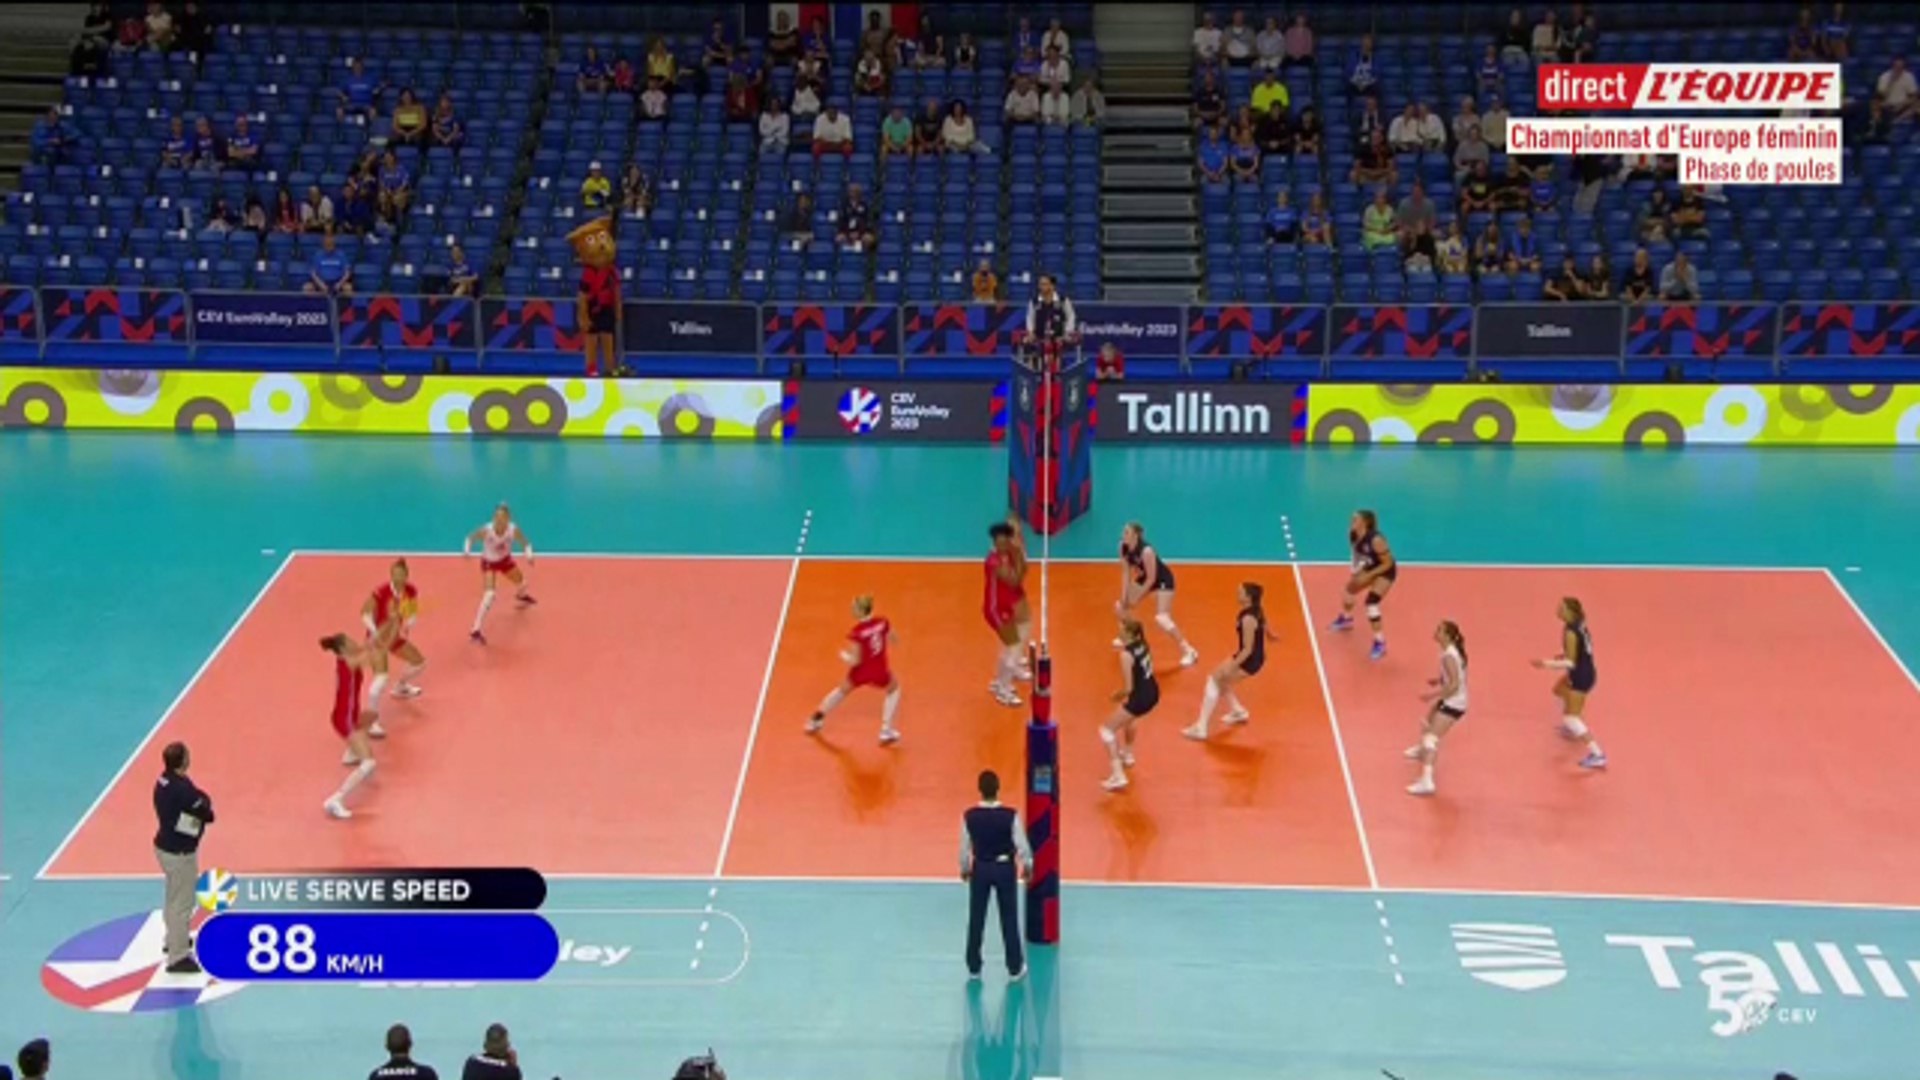 Volley-ball - Championnat d'Europe féminin : Le replay de France - Finlande  - Vidéo Dailymotion